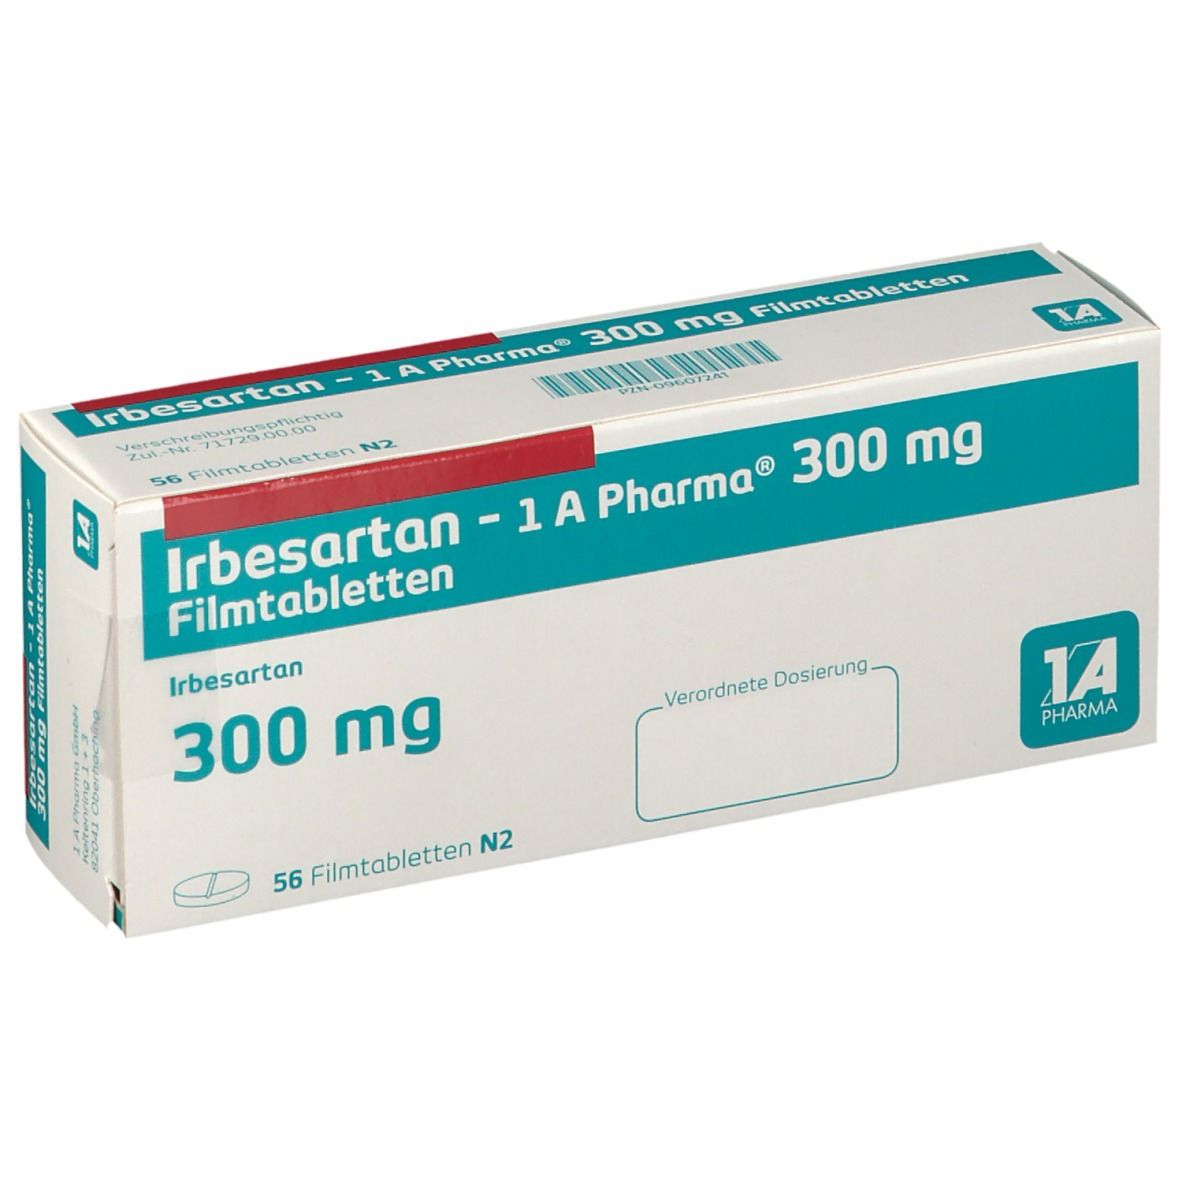 Irbesartan 1A Pharma® 300Mg